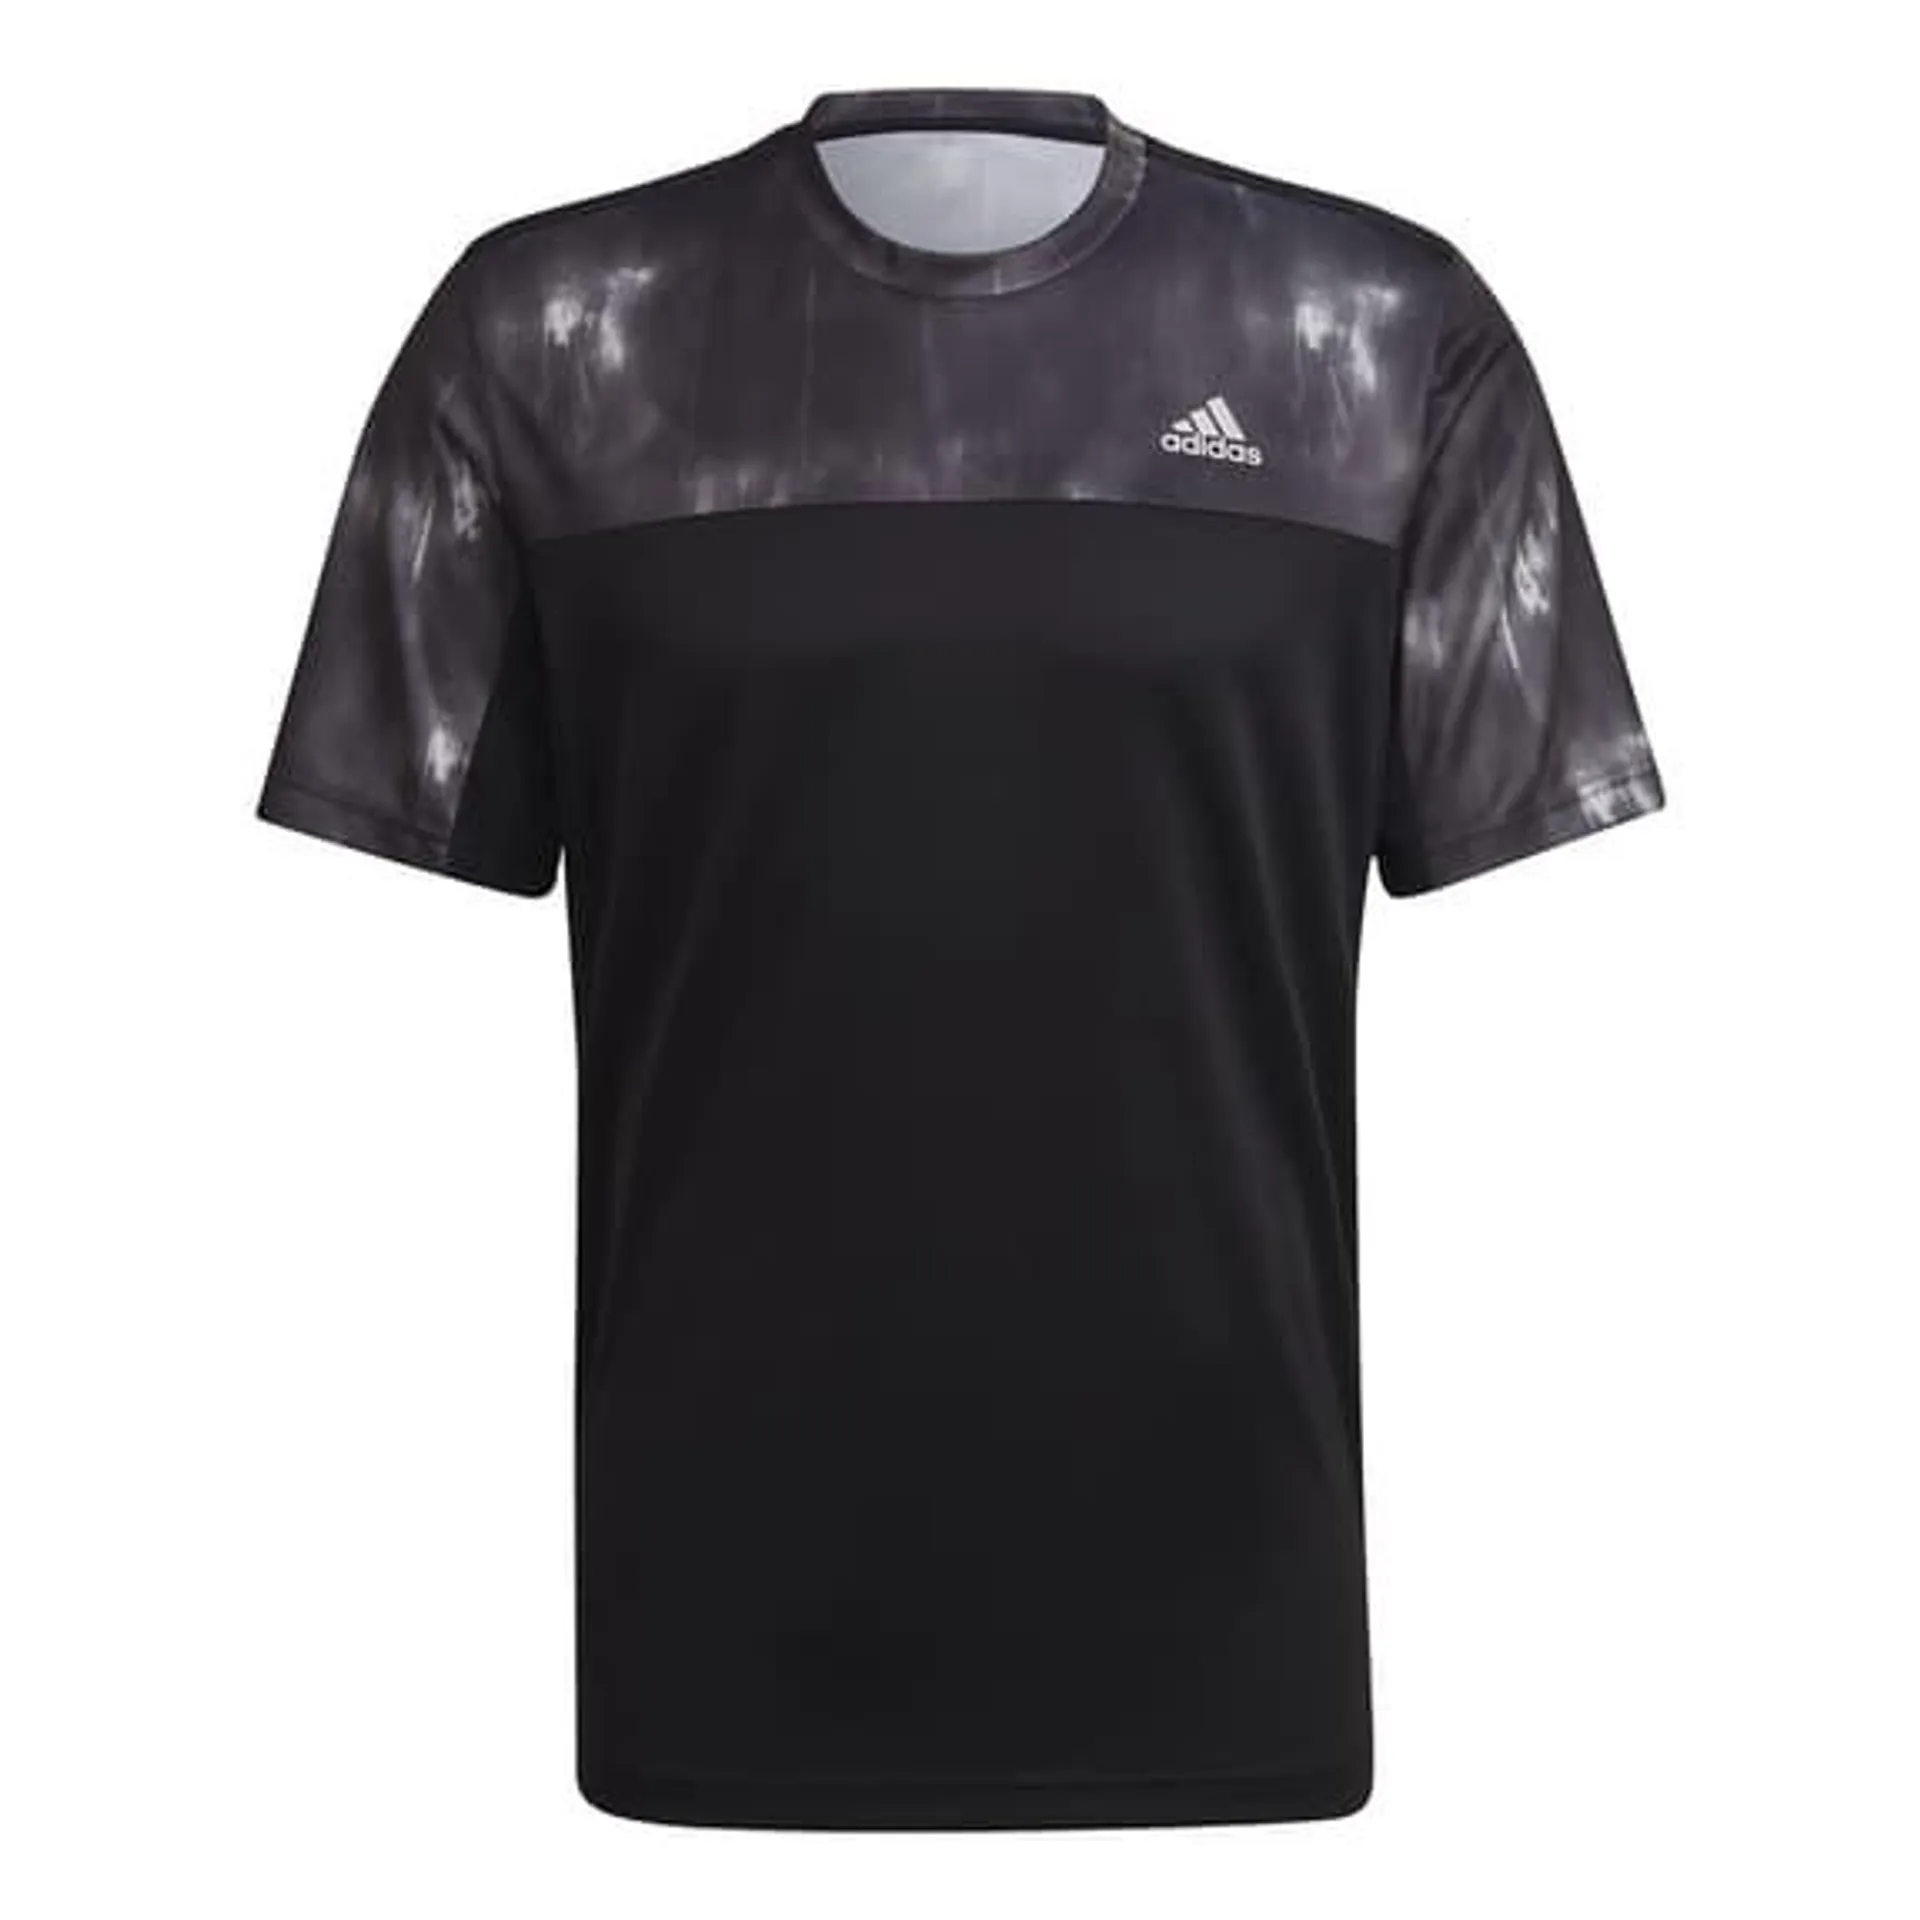 T-shirt adidas Aeroready Workout Chalk Print manche courte noir gris